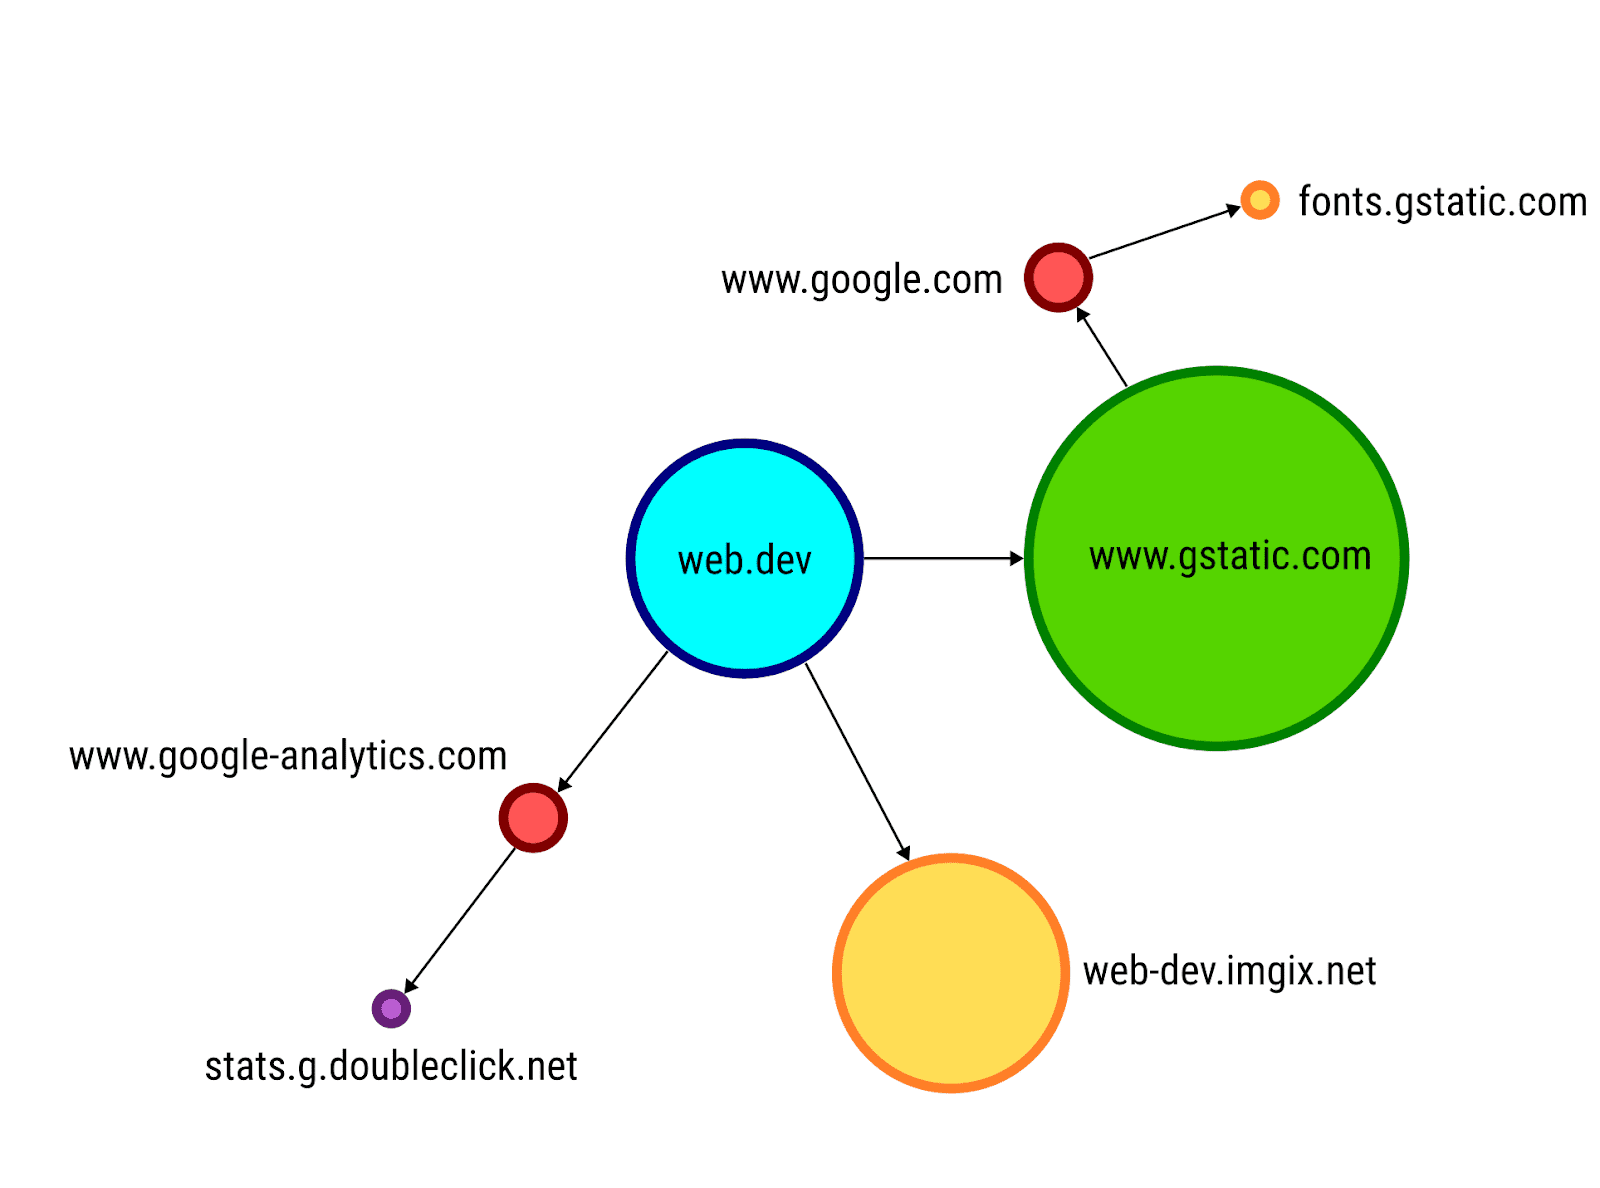 Peta permintaan web.dev.